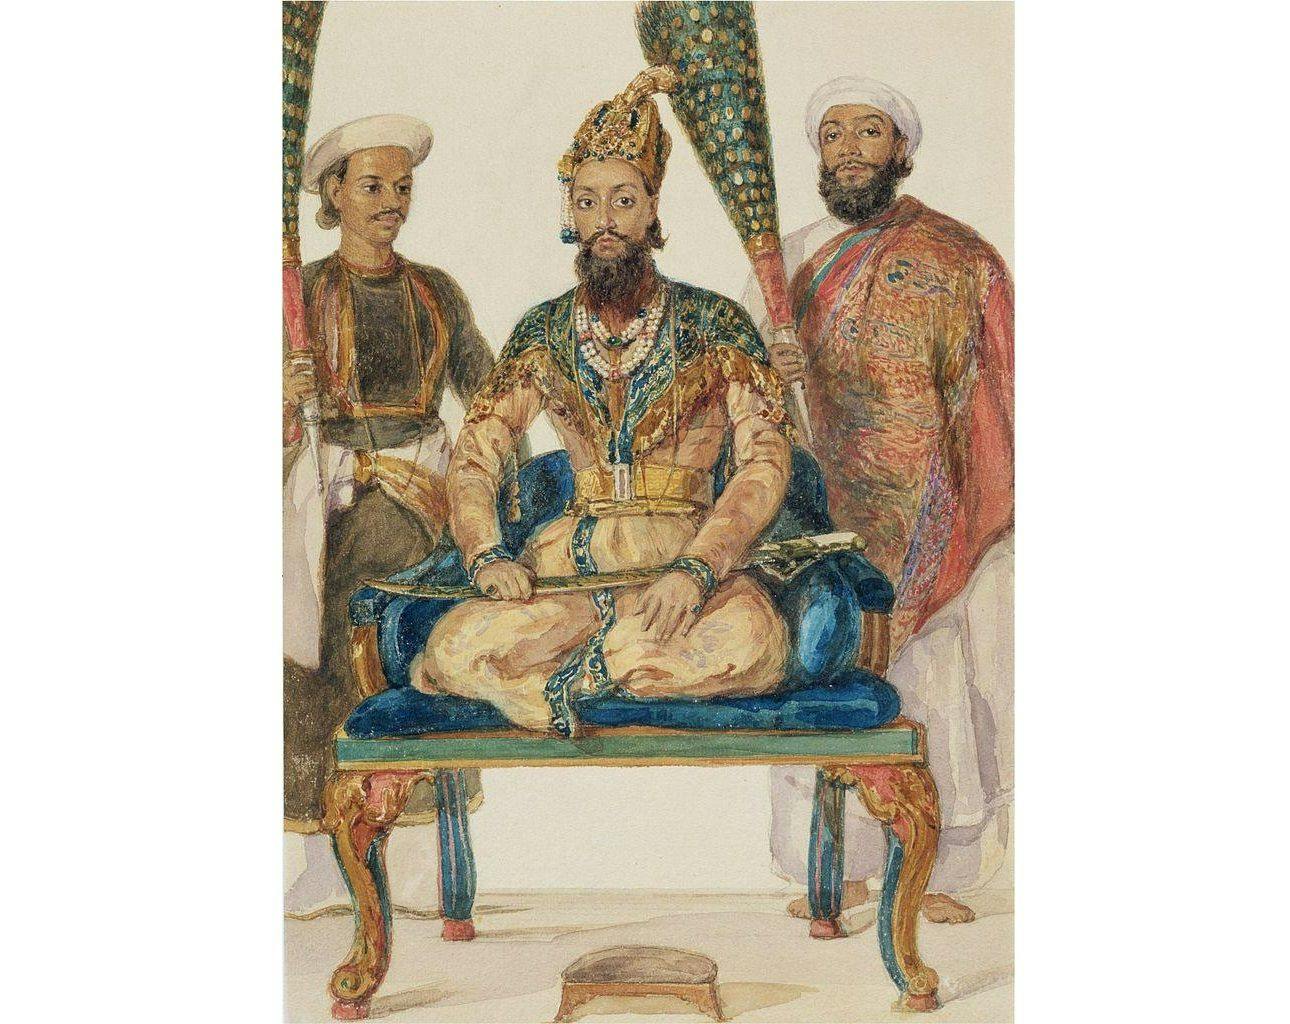 Crown Prince Mirza Fakhru. Portrait by William Carpenter, circa 1856, a few months before his death